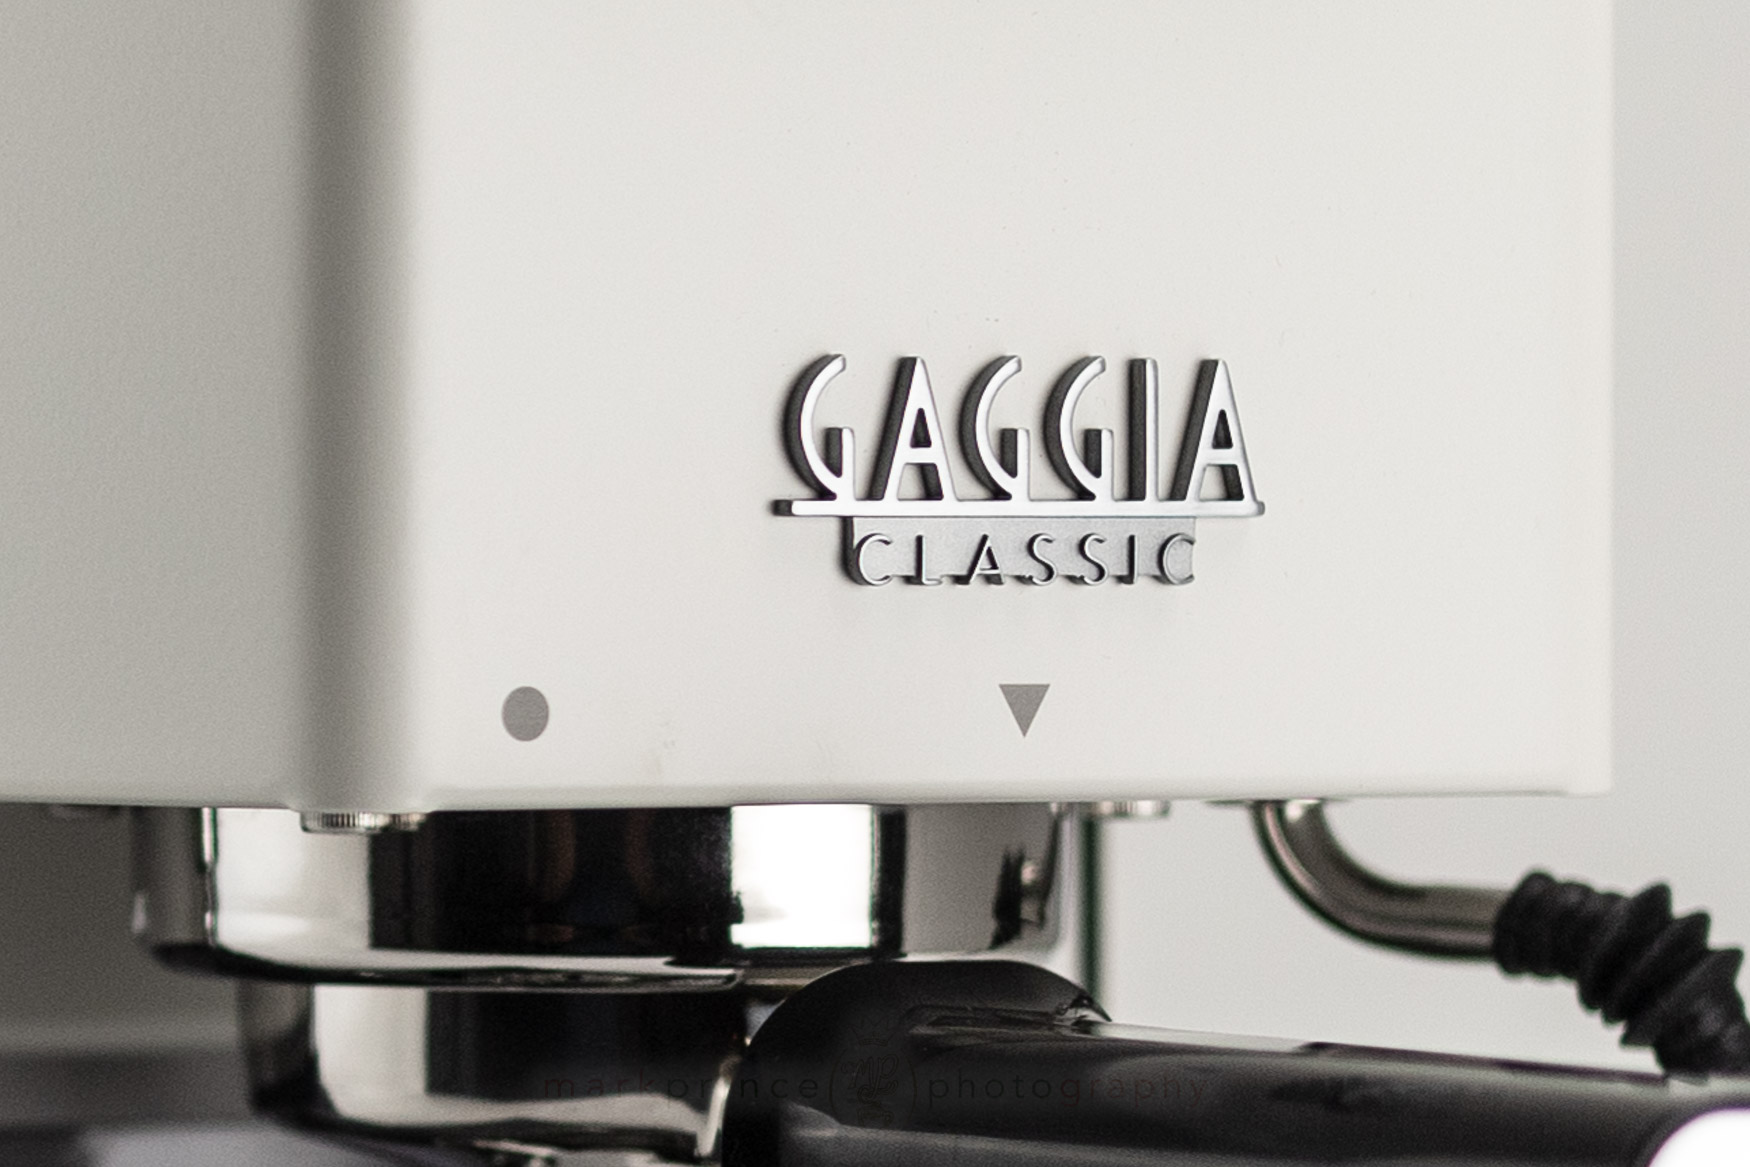 Gaggia Classic Pro Review [IN-DEPTH TEST]